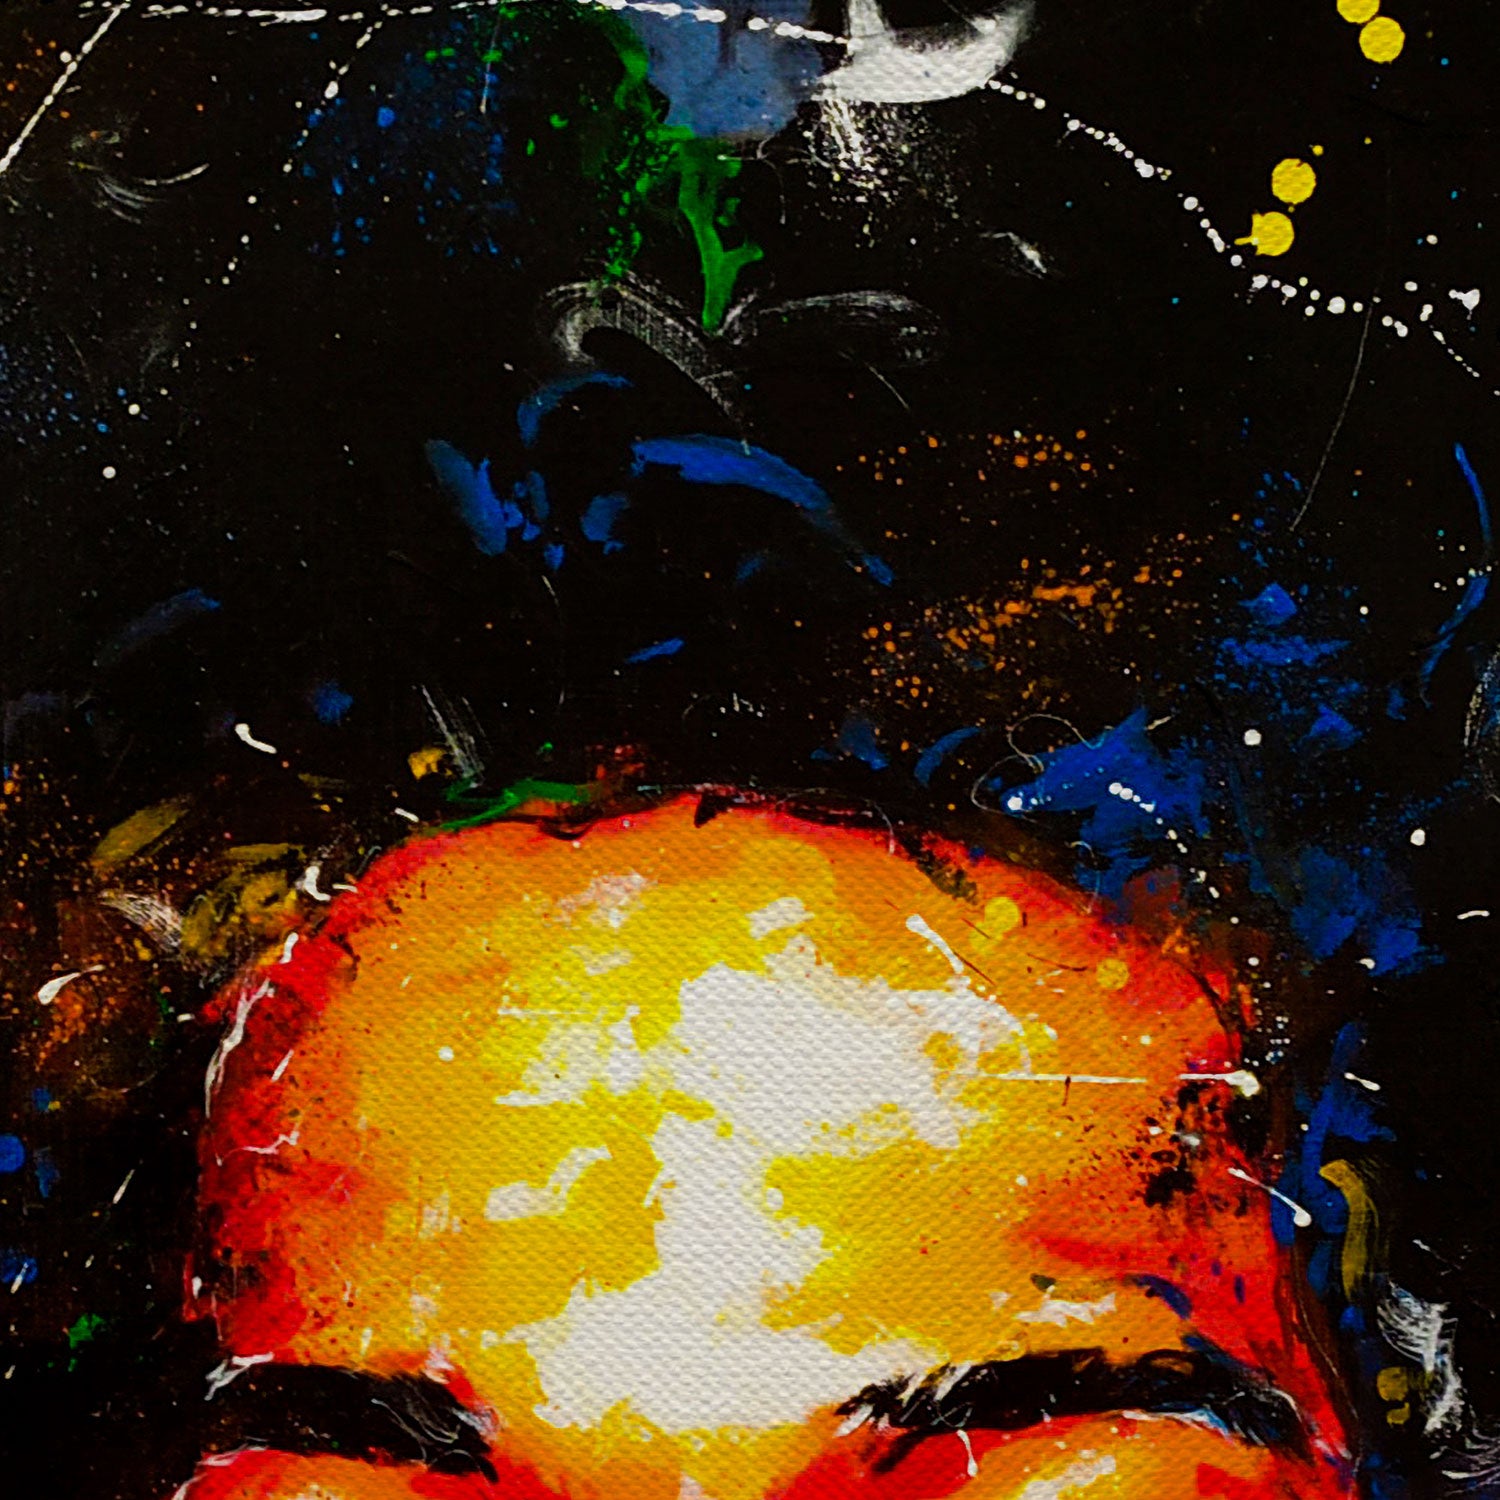 Jean Michel Basquiat Portrait Canvas Wall Art